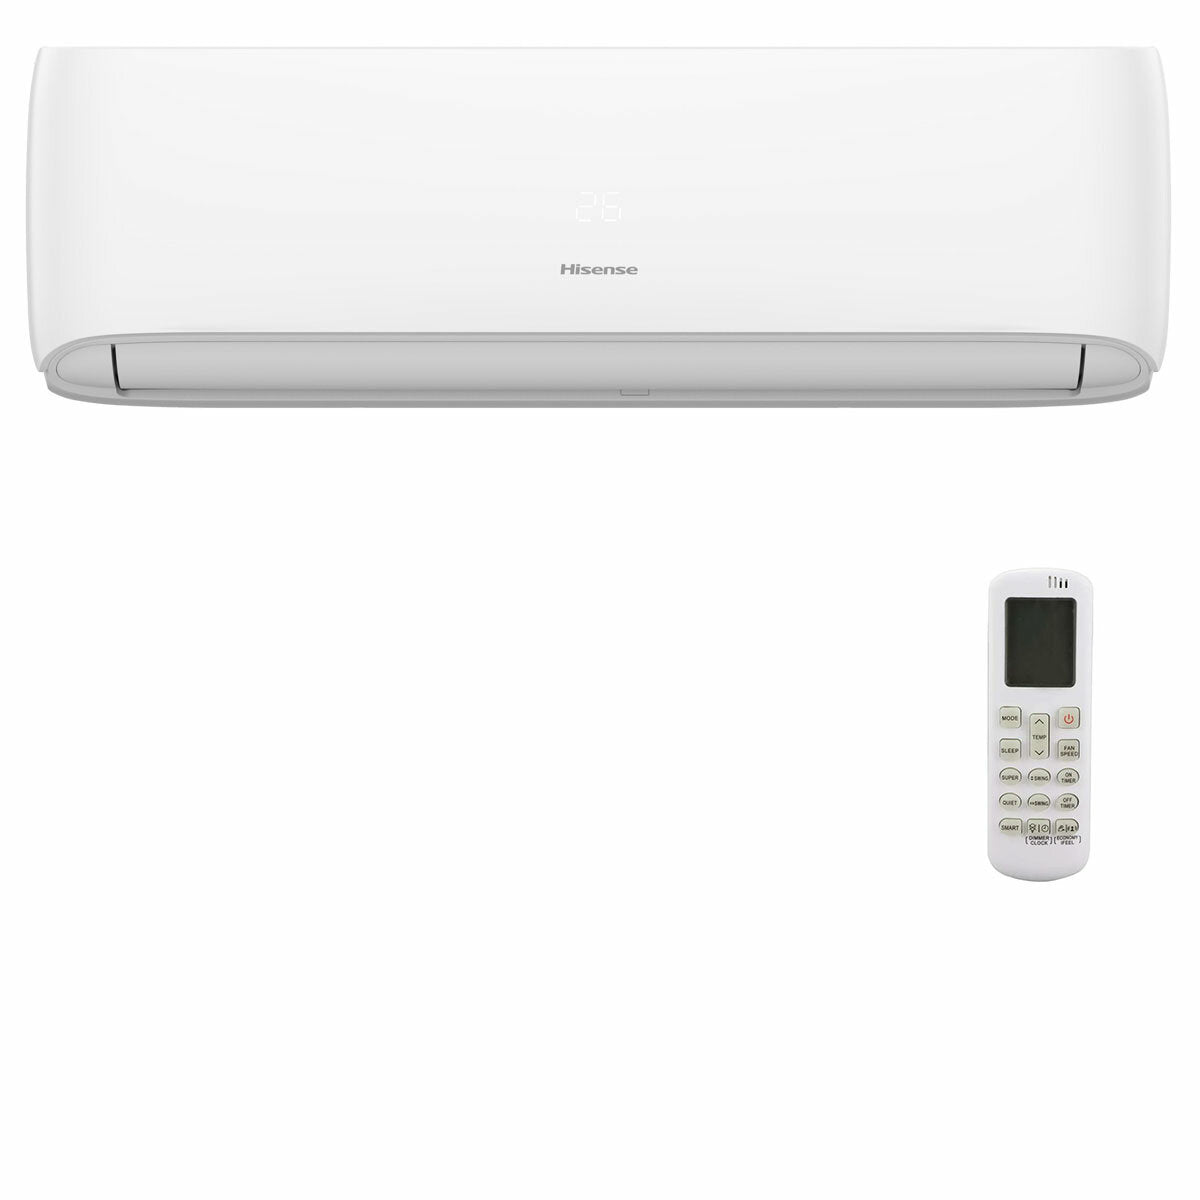 Hisense Hi-Comfort dual split air conditioner 7000+9000 BTU inverter A++ wifi outdoor unit 5.5 kW